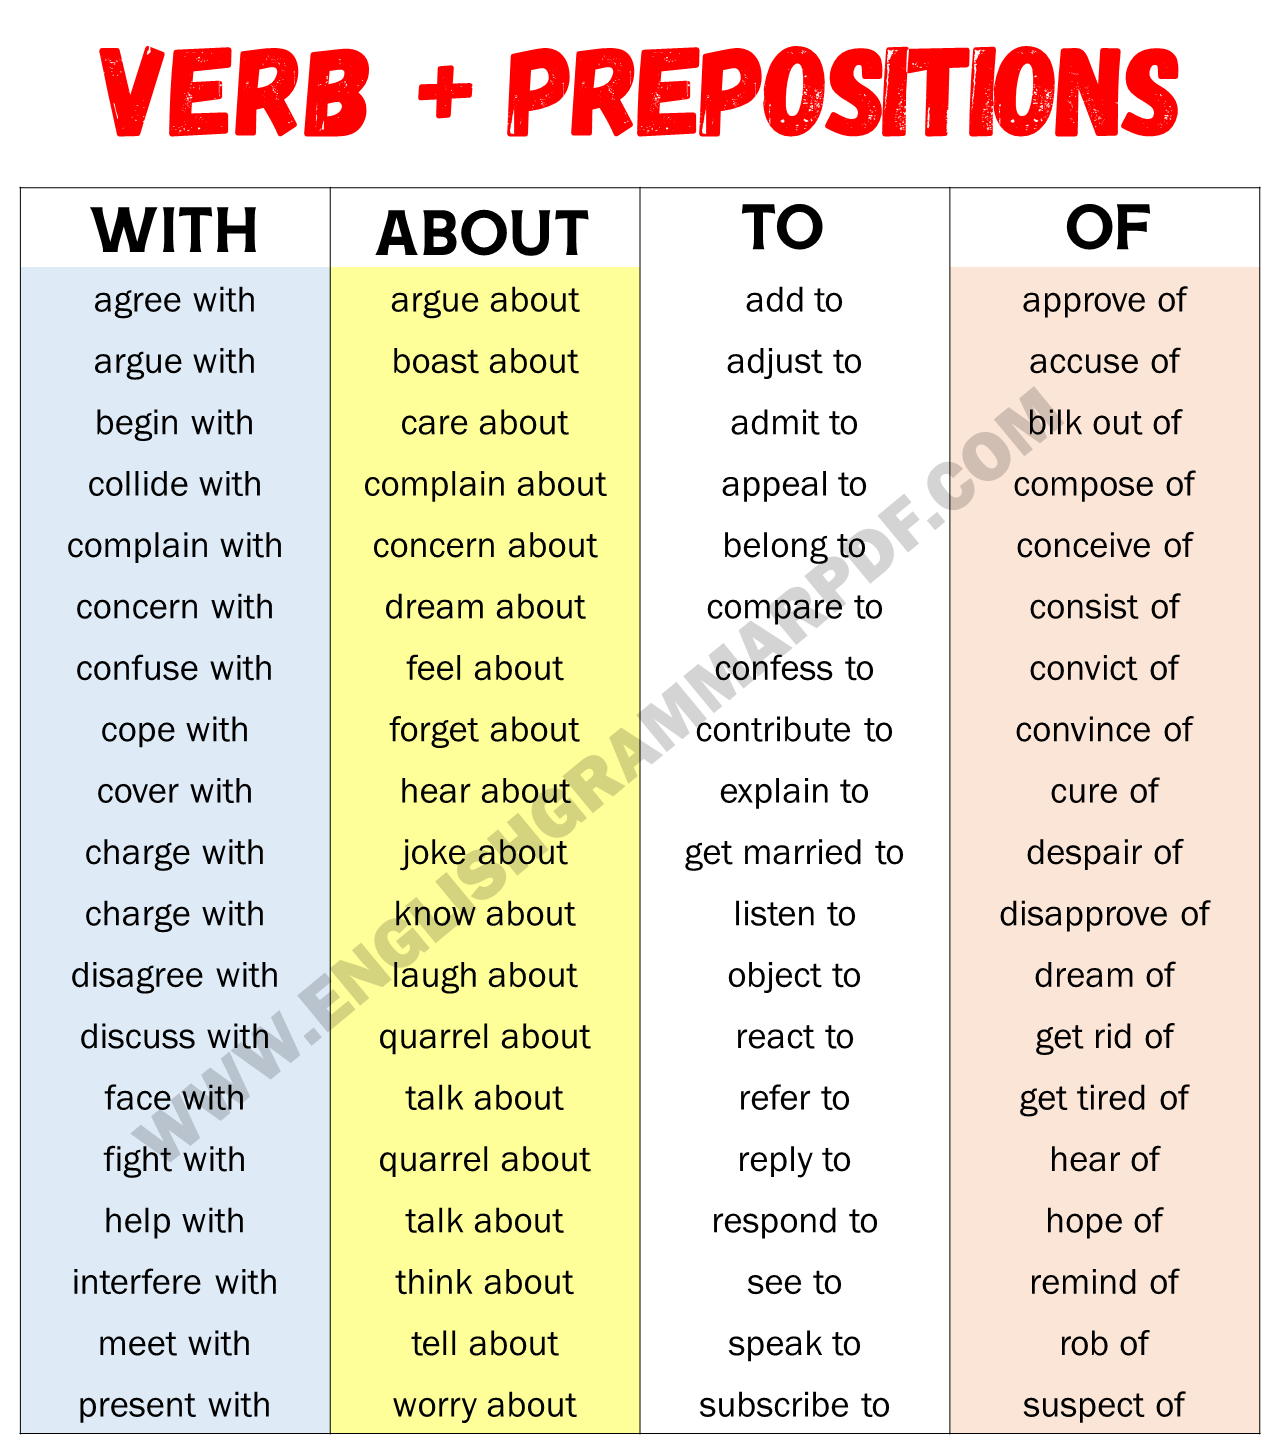 Verb + Prepositions